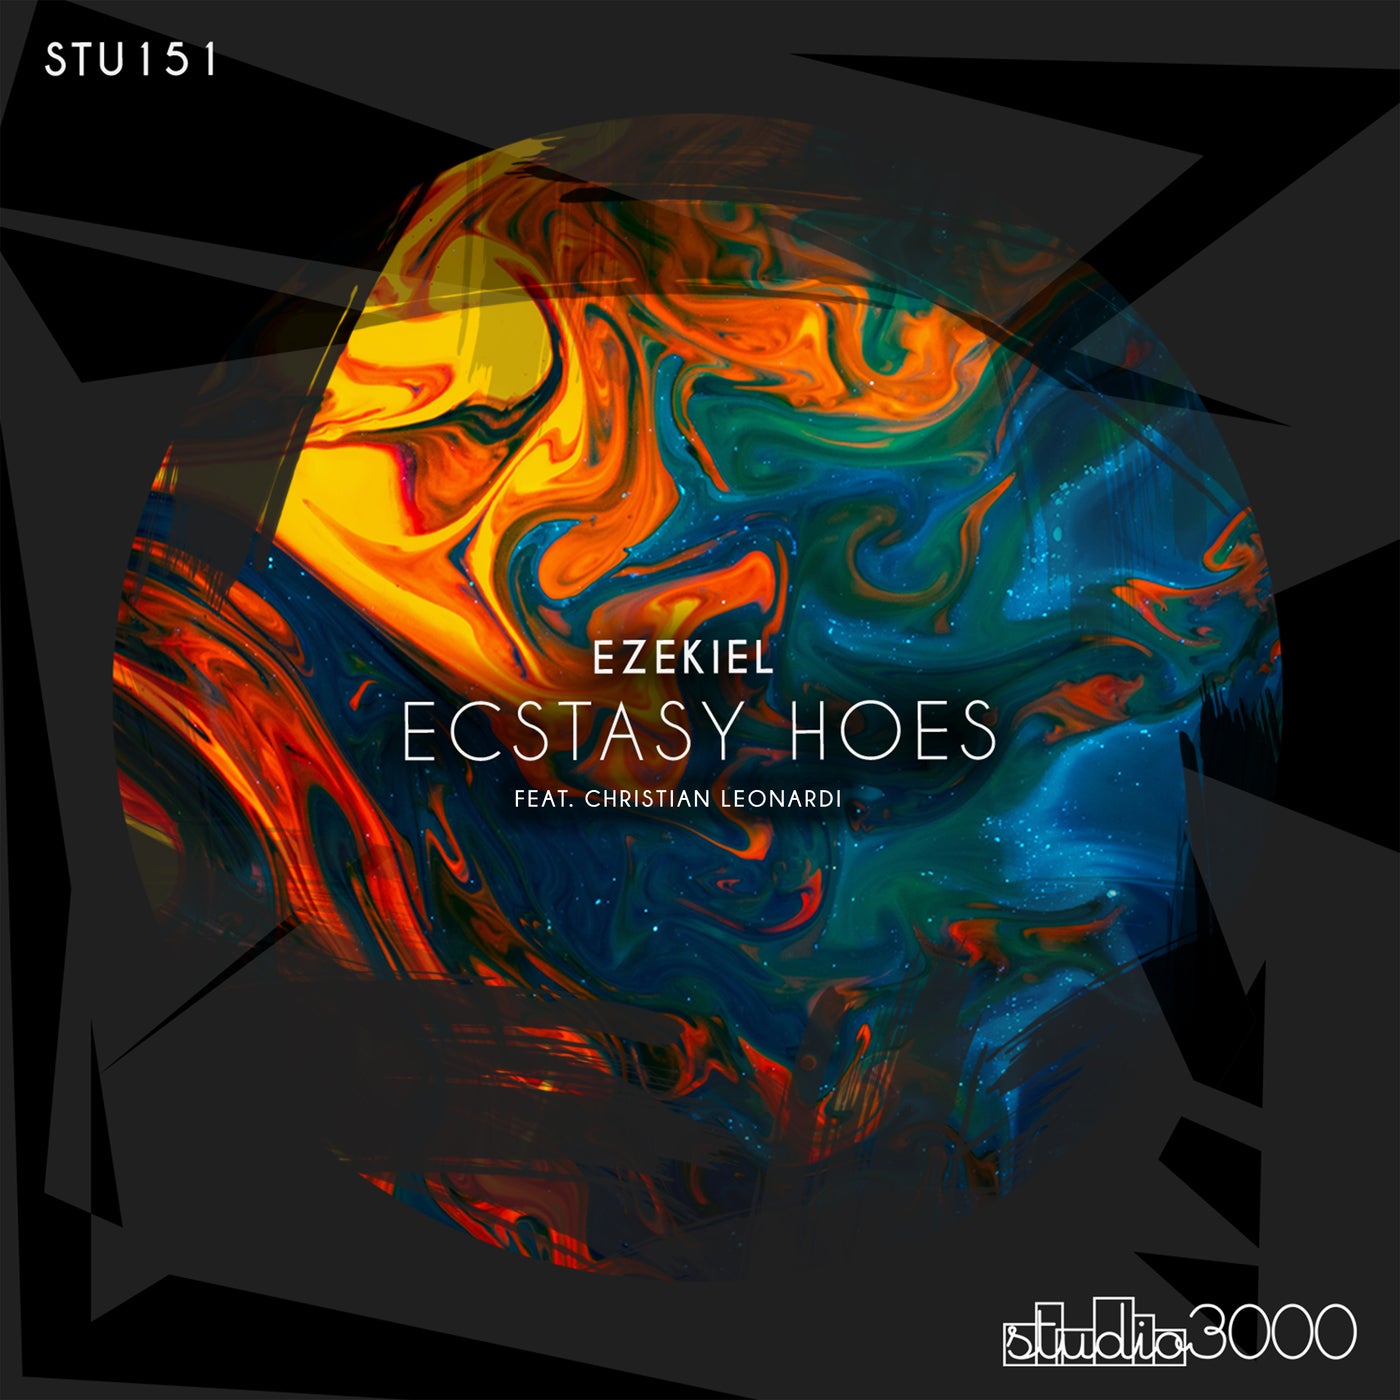 image cover: Ezekiel (DE) - Ecstasy Hoes feat. Christian Leonardi / STU151